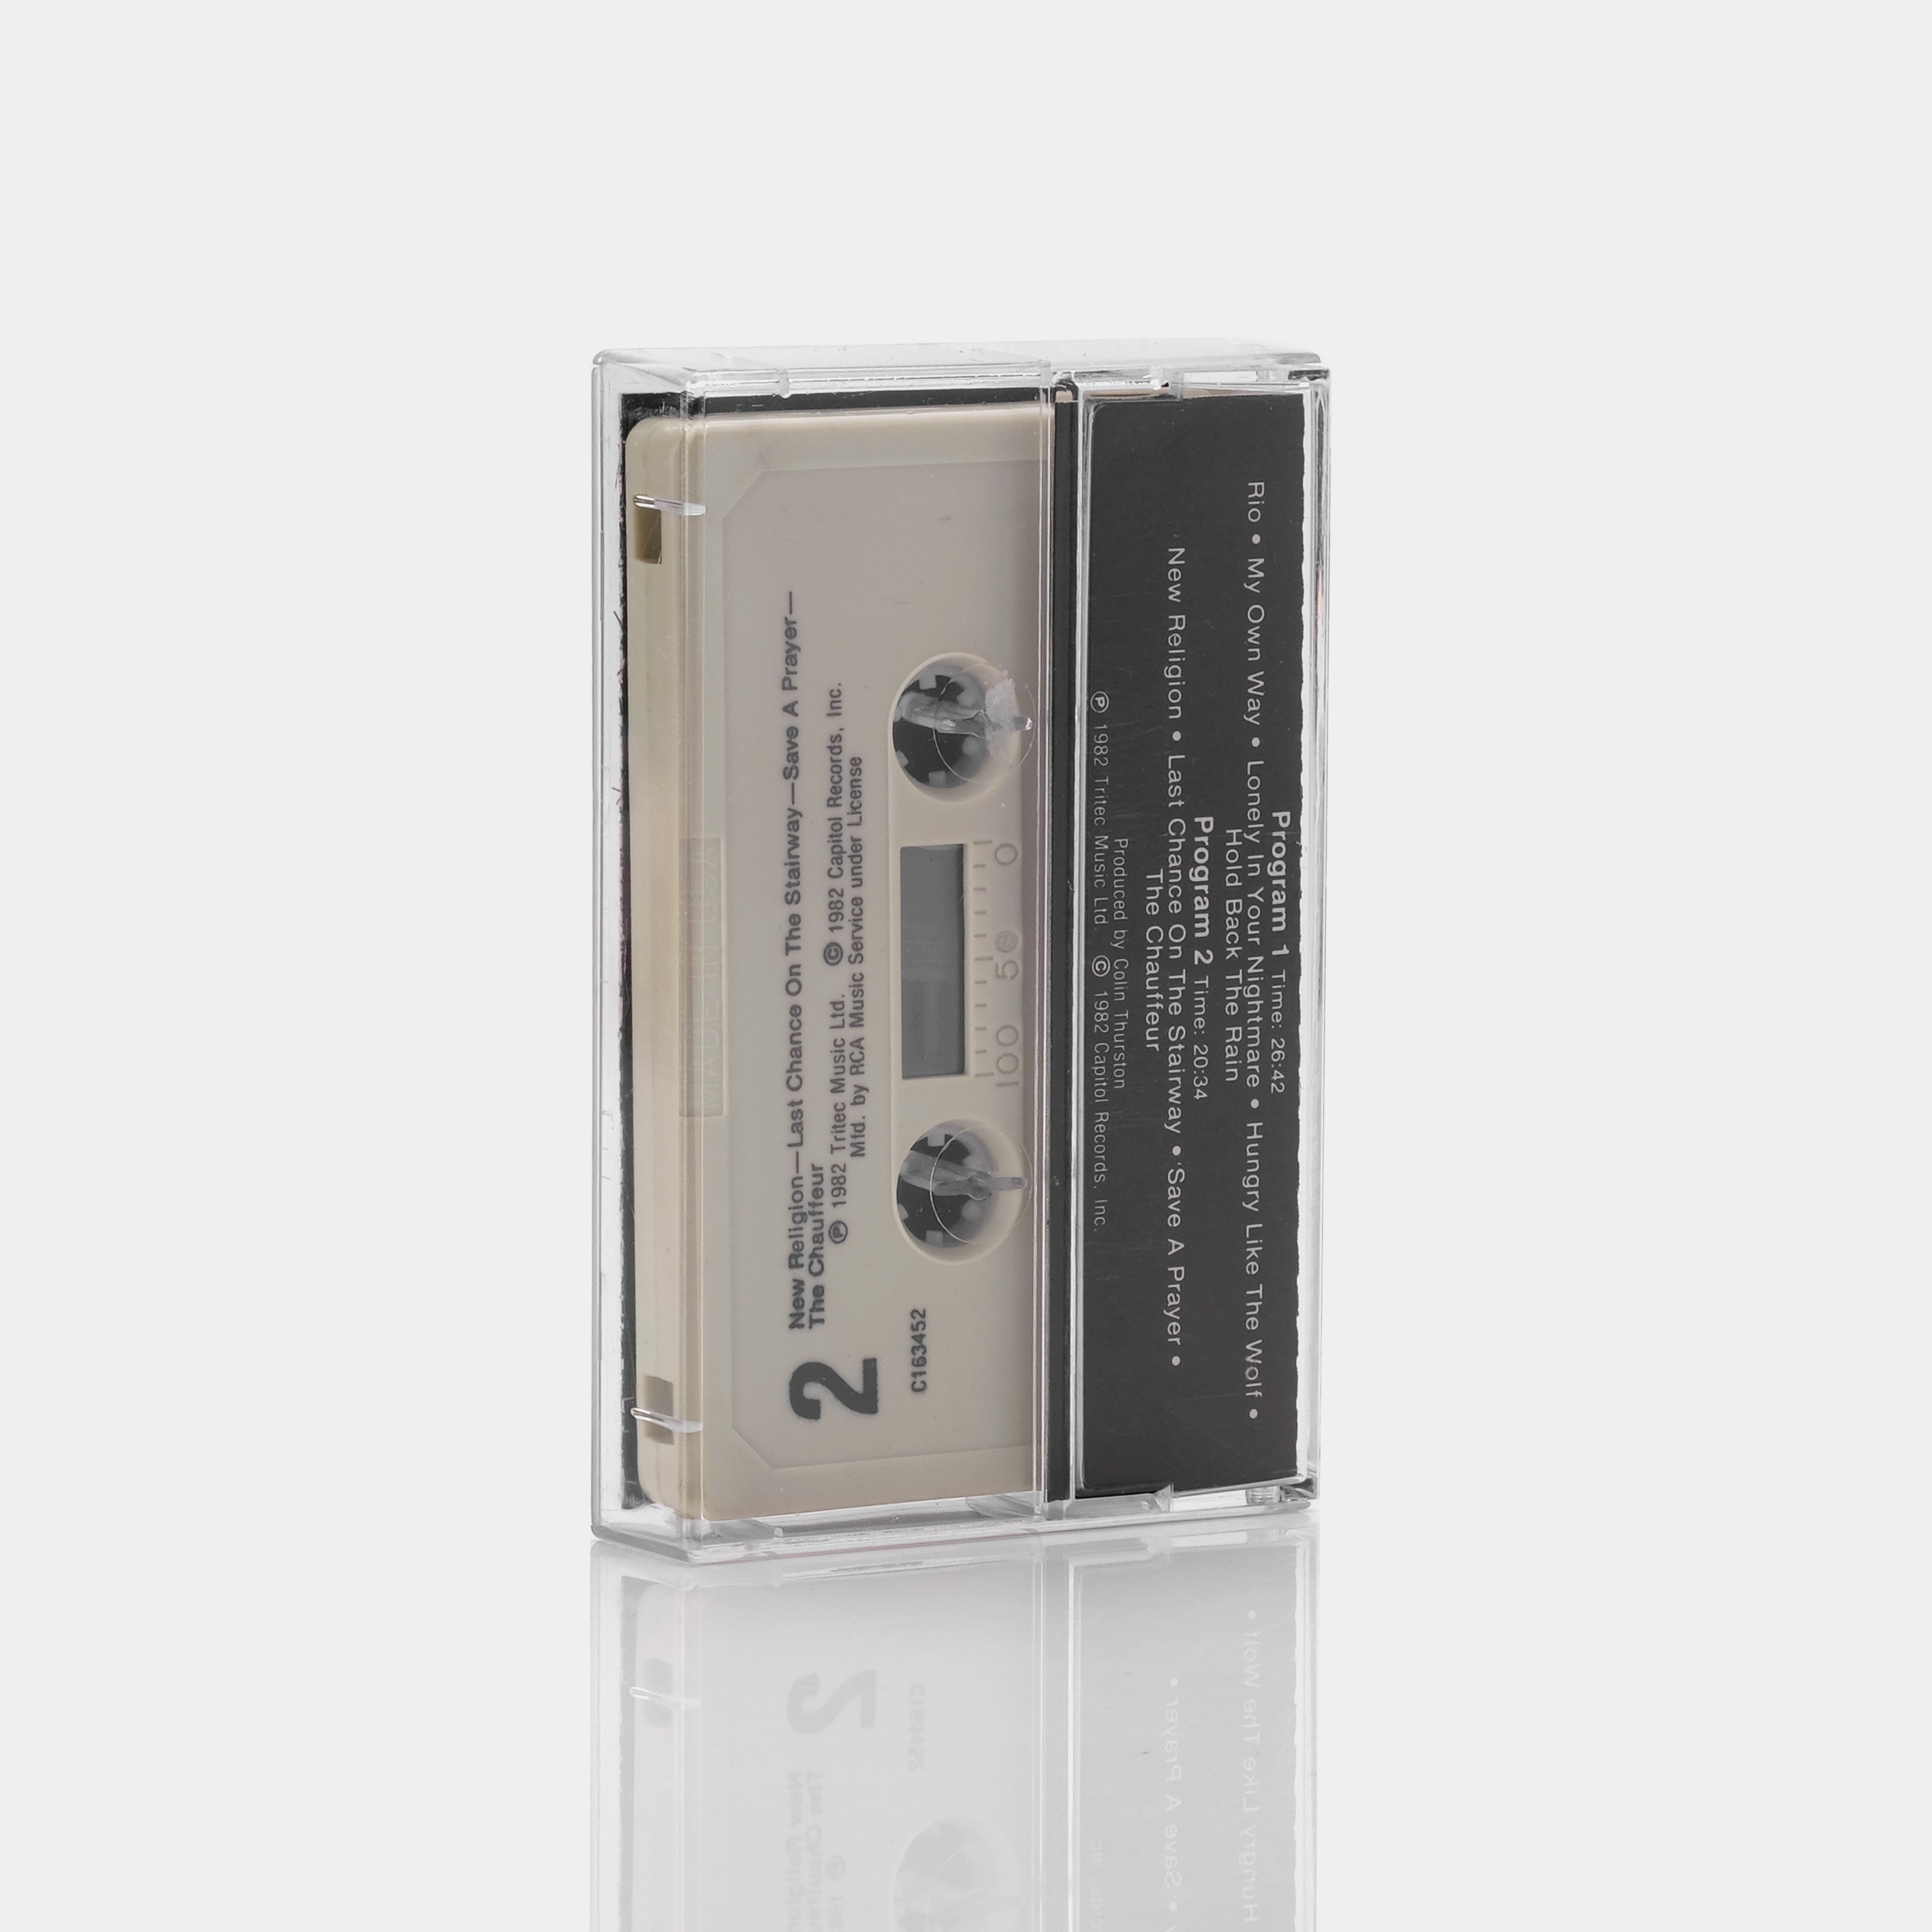 Duran Duran - Rio Cassette Tape